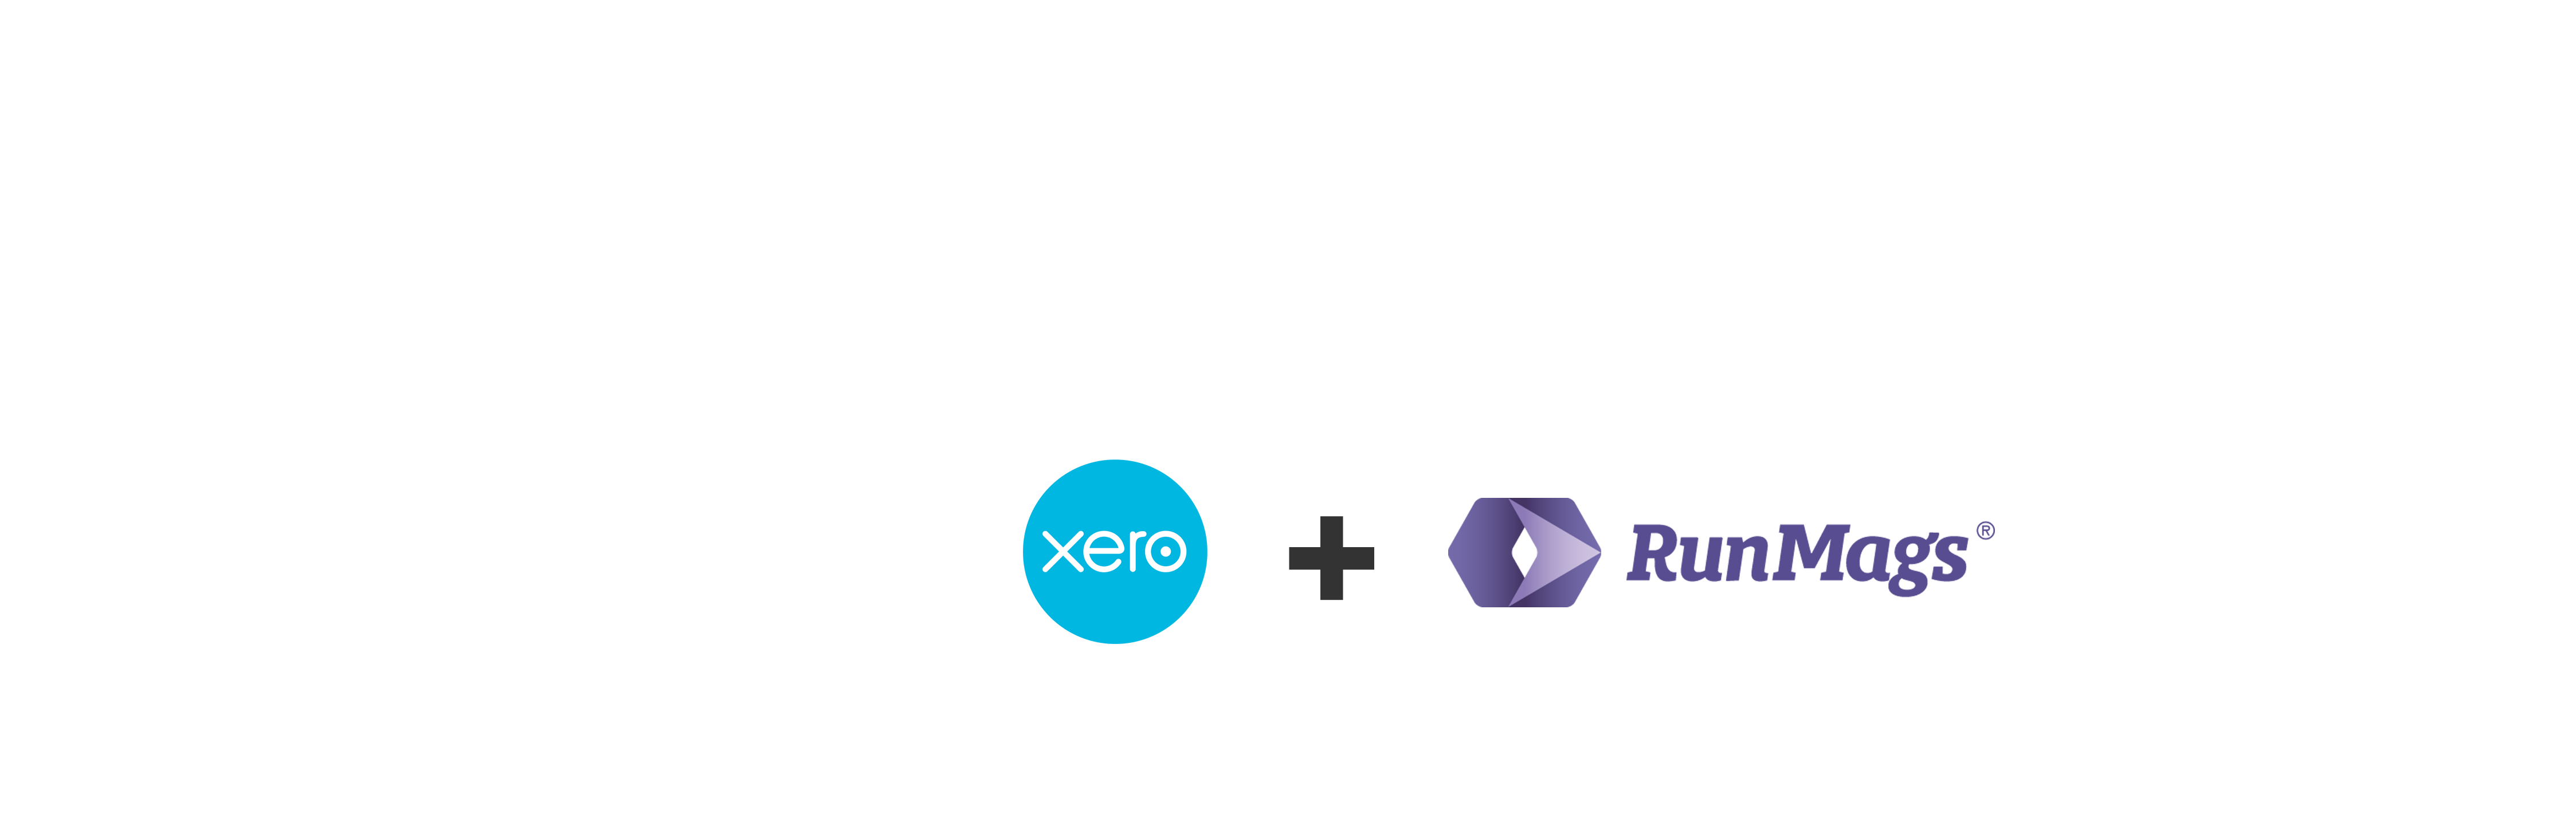 RunMags-Integration-Banner-Xero.png